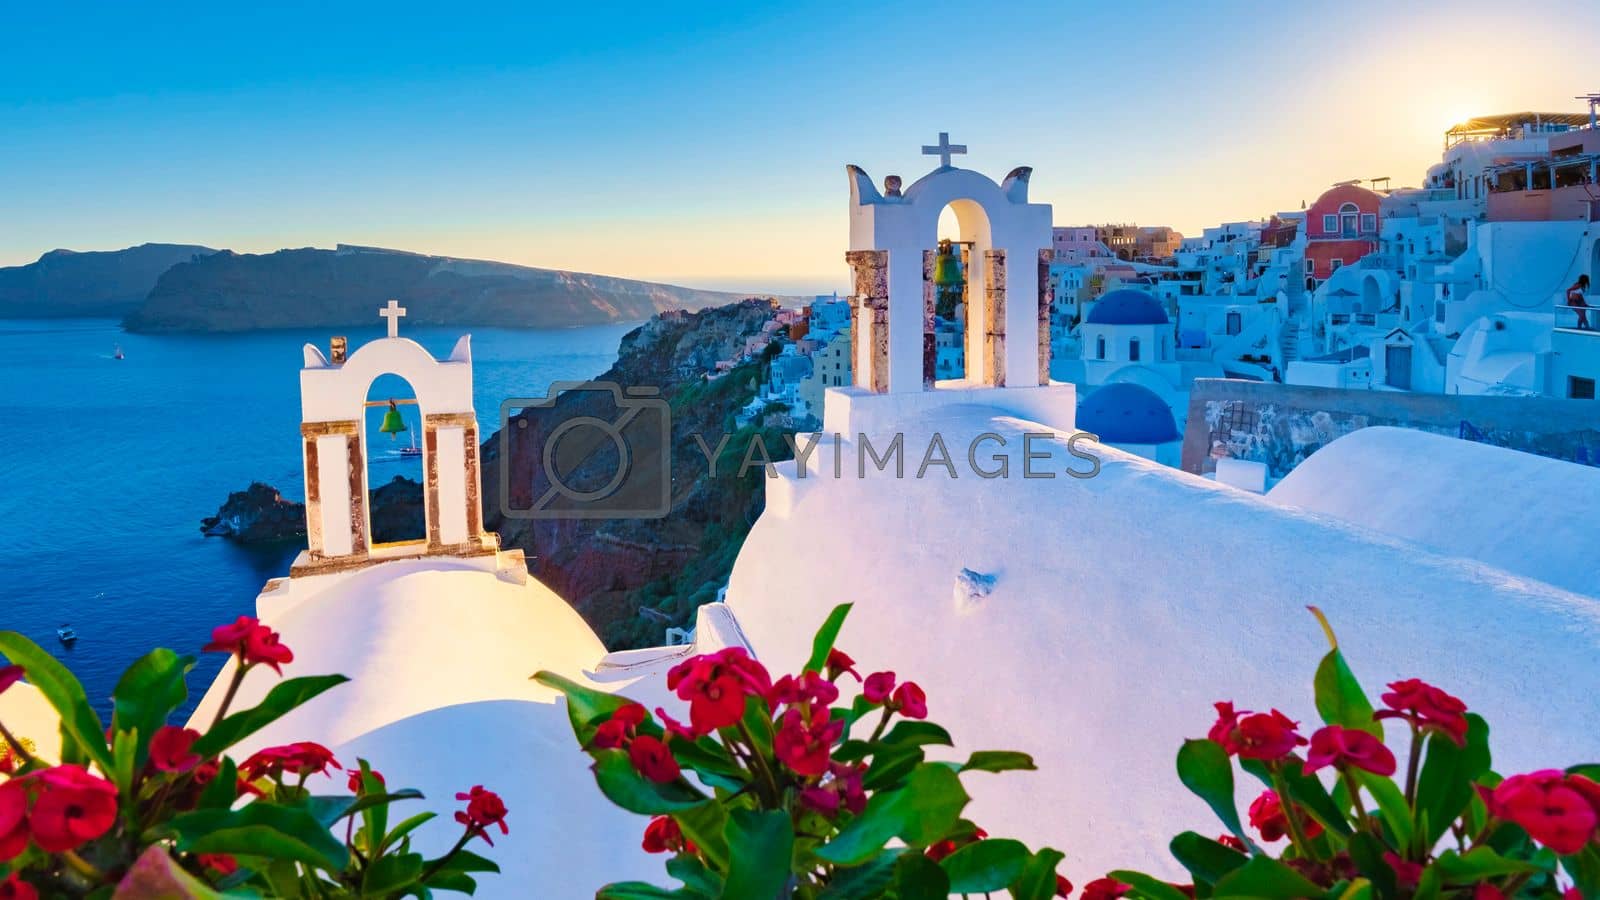 Royalty free image of sunset at Oia Santorini Greece, traditional Greek village by fokkebok